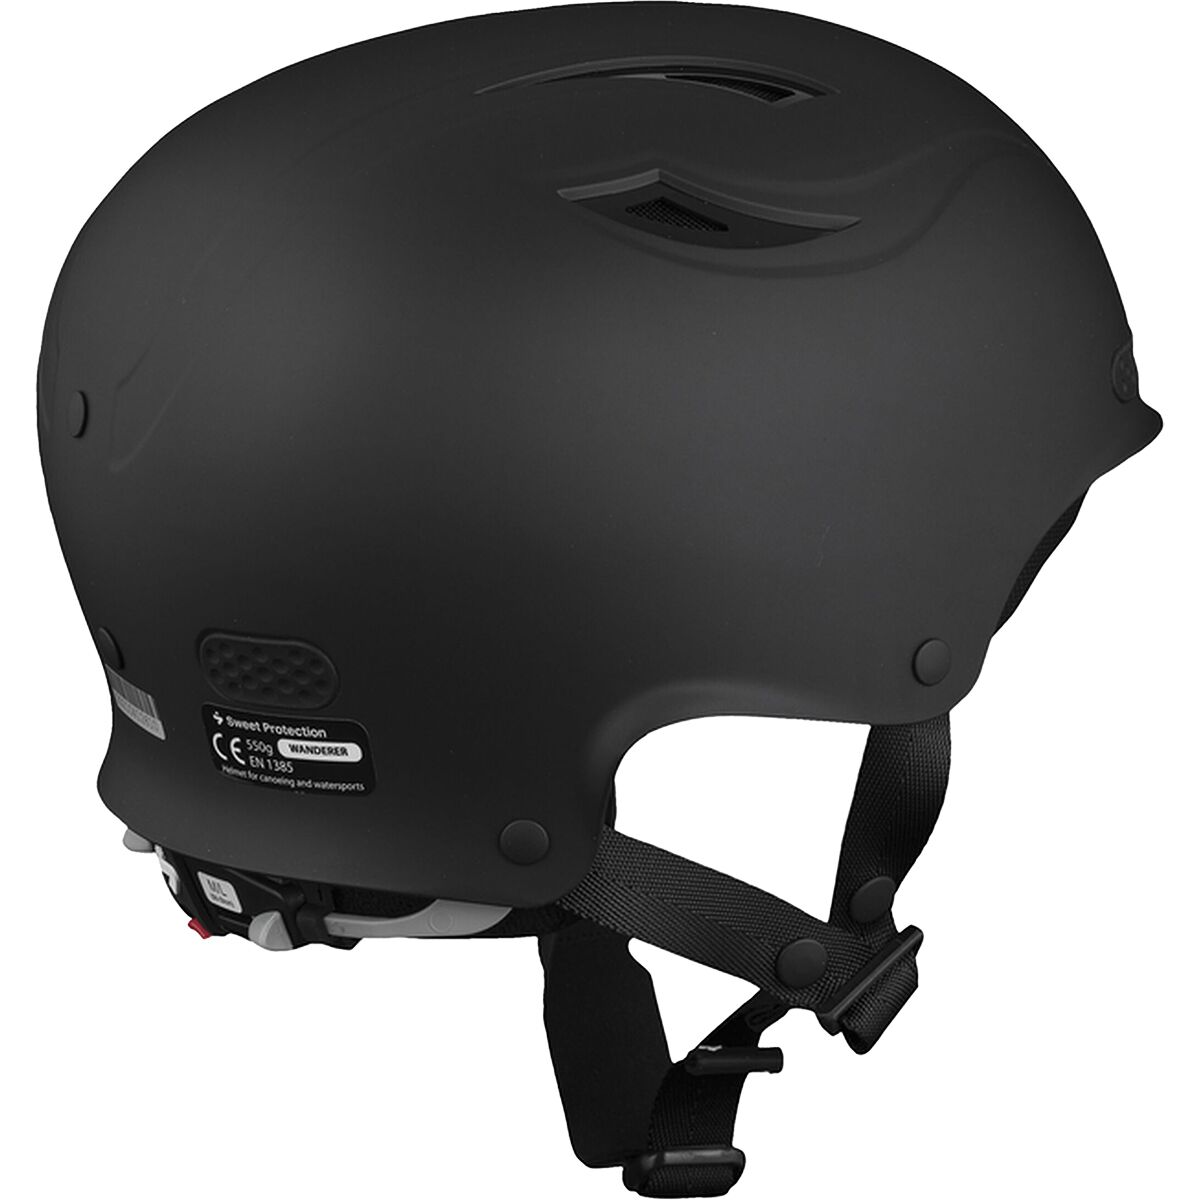 Sweet Protection Wanderer Helmet RRP £129.99 